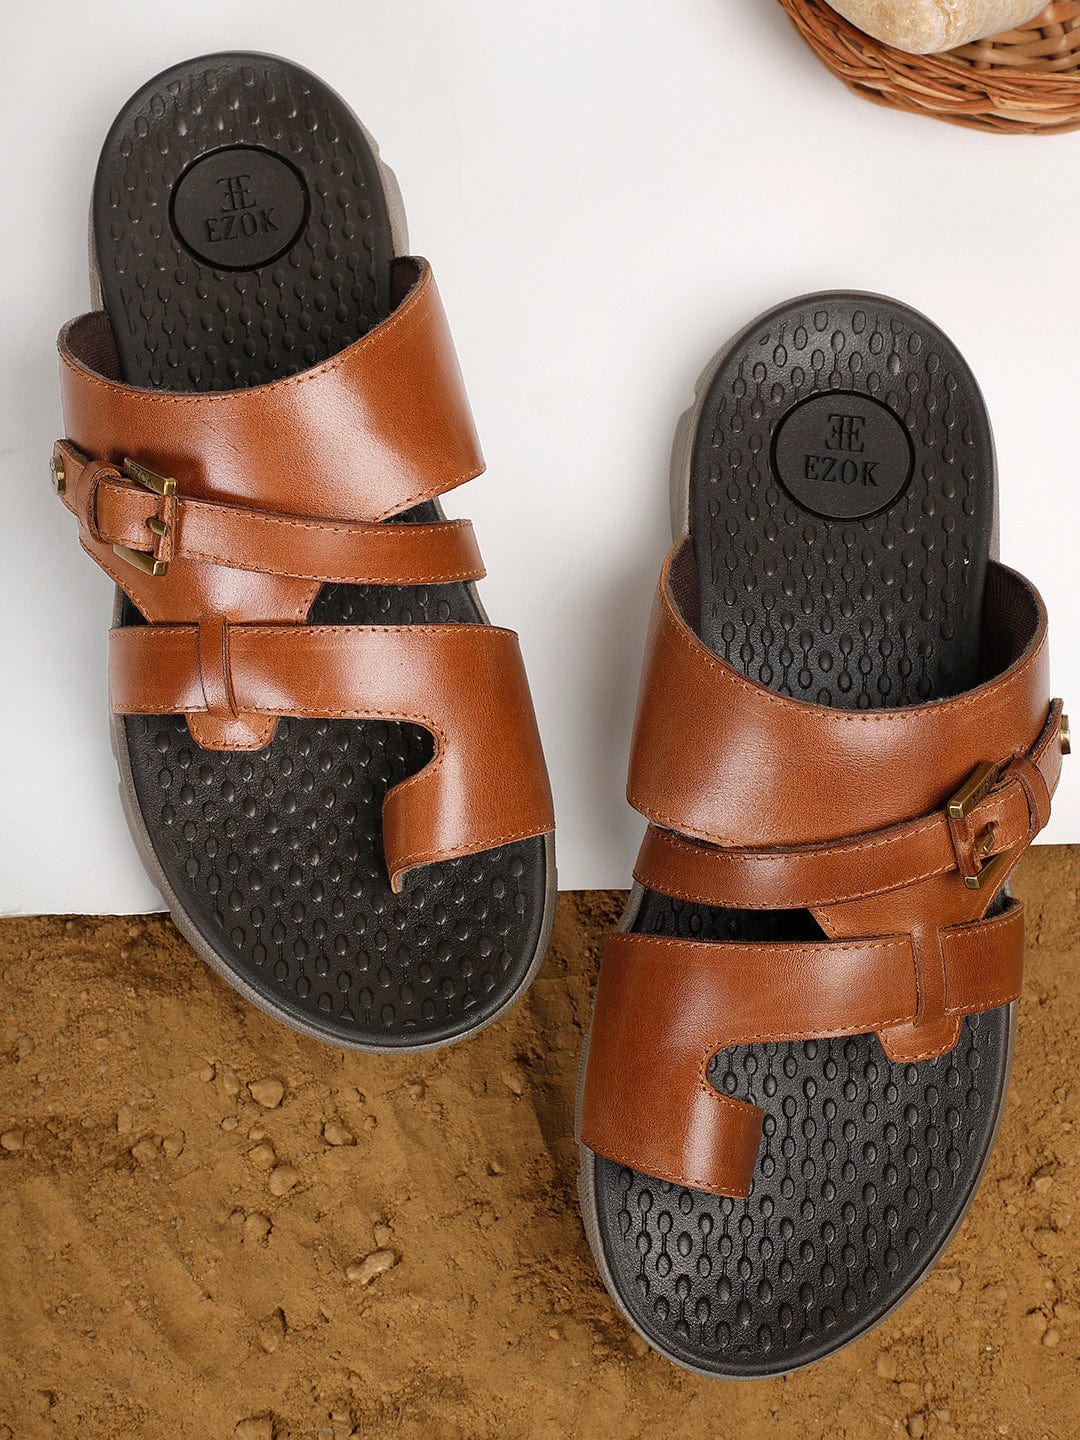 Leather sandal for men (Tan)